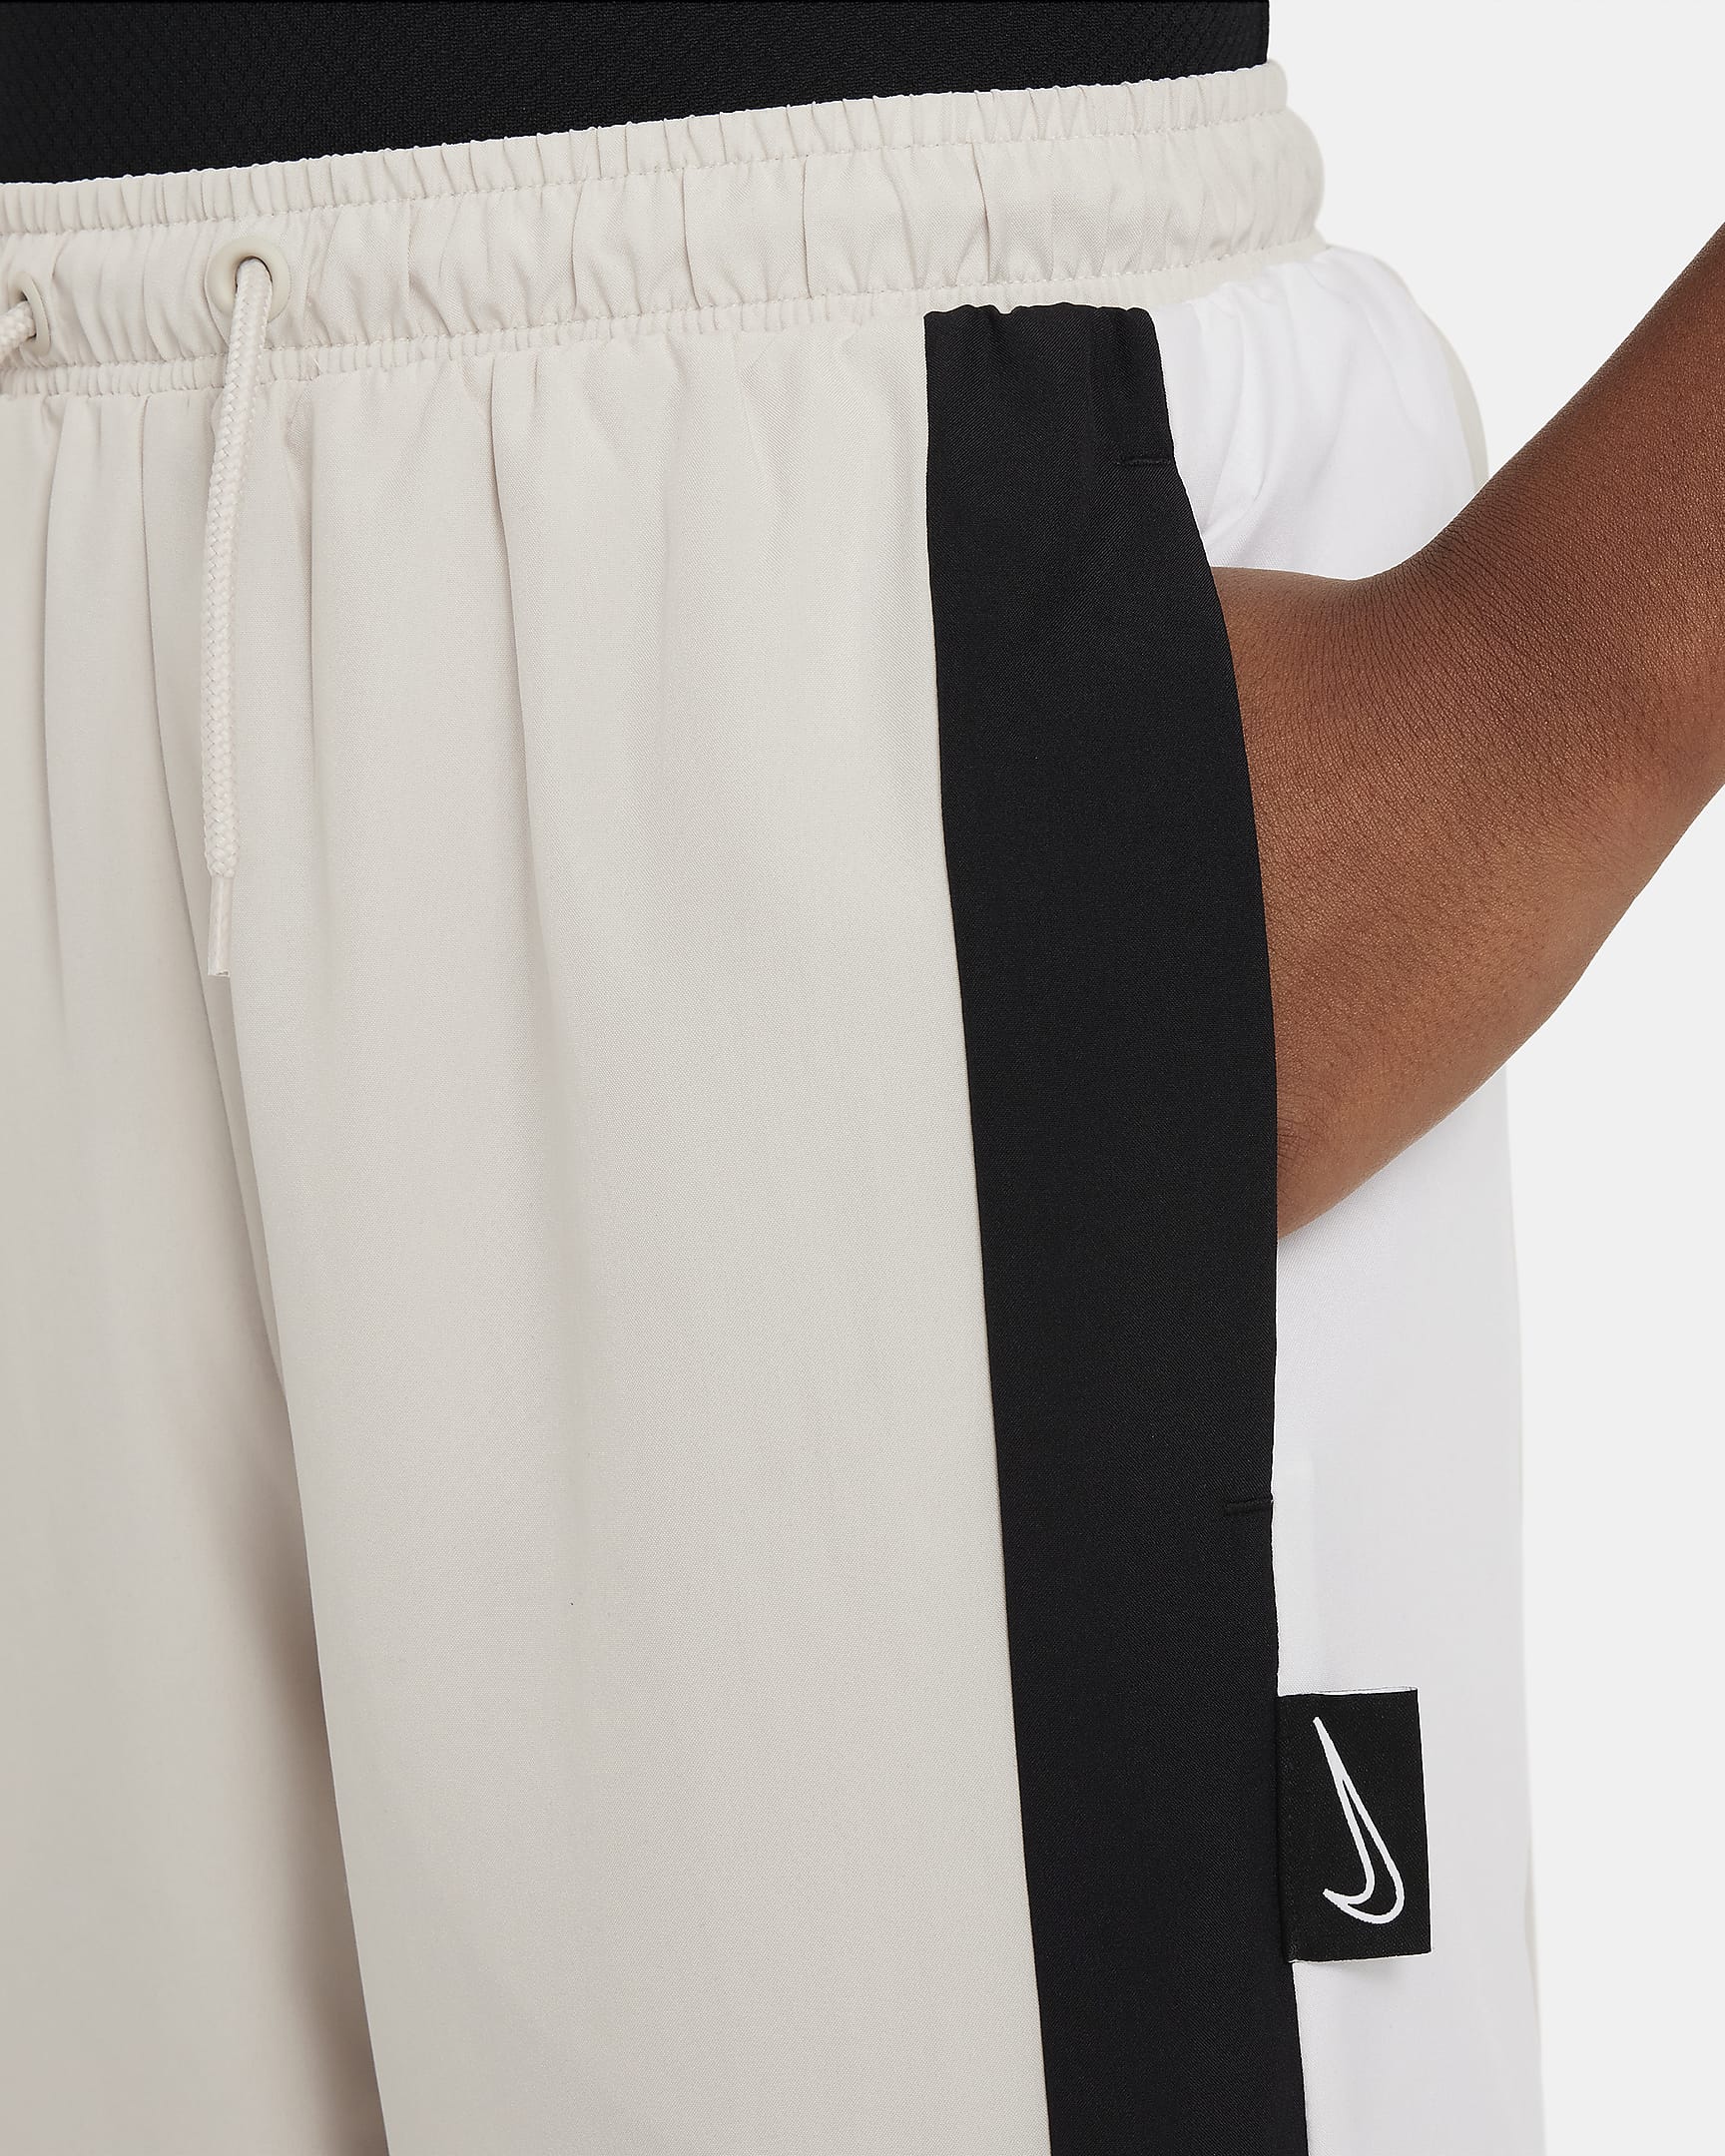 Nike Dri-FIT Academy Xandall - Nen/a - Light Orewood Brown/Blanc/Negre/Blanc